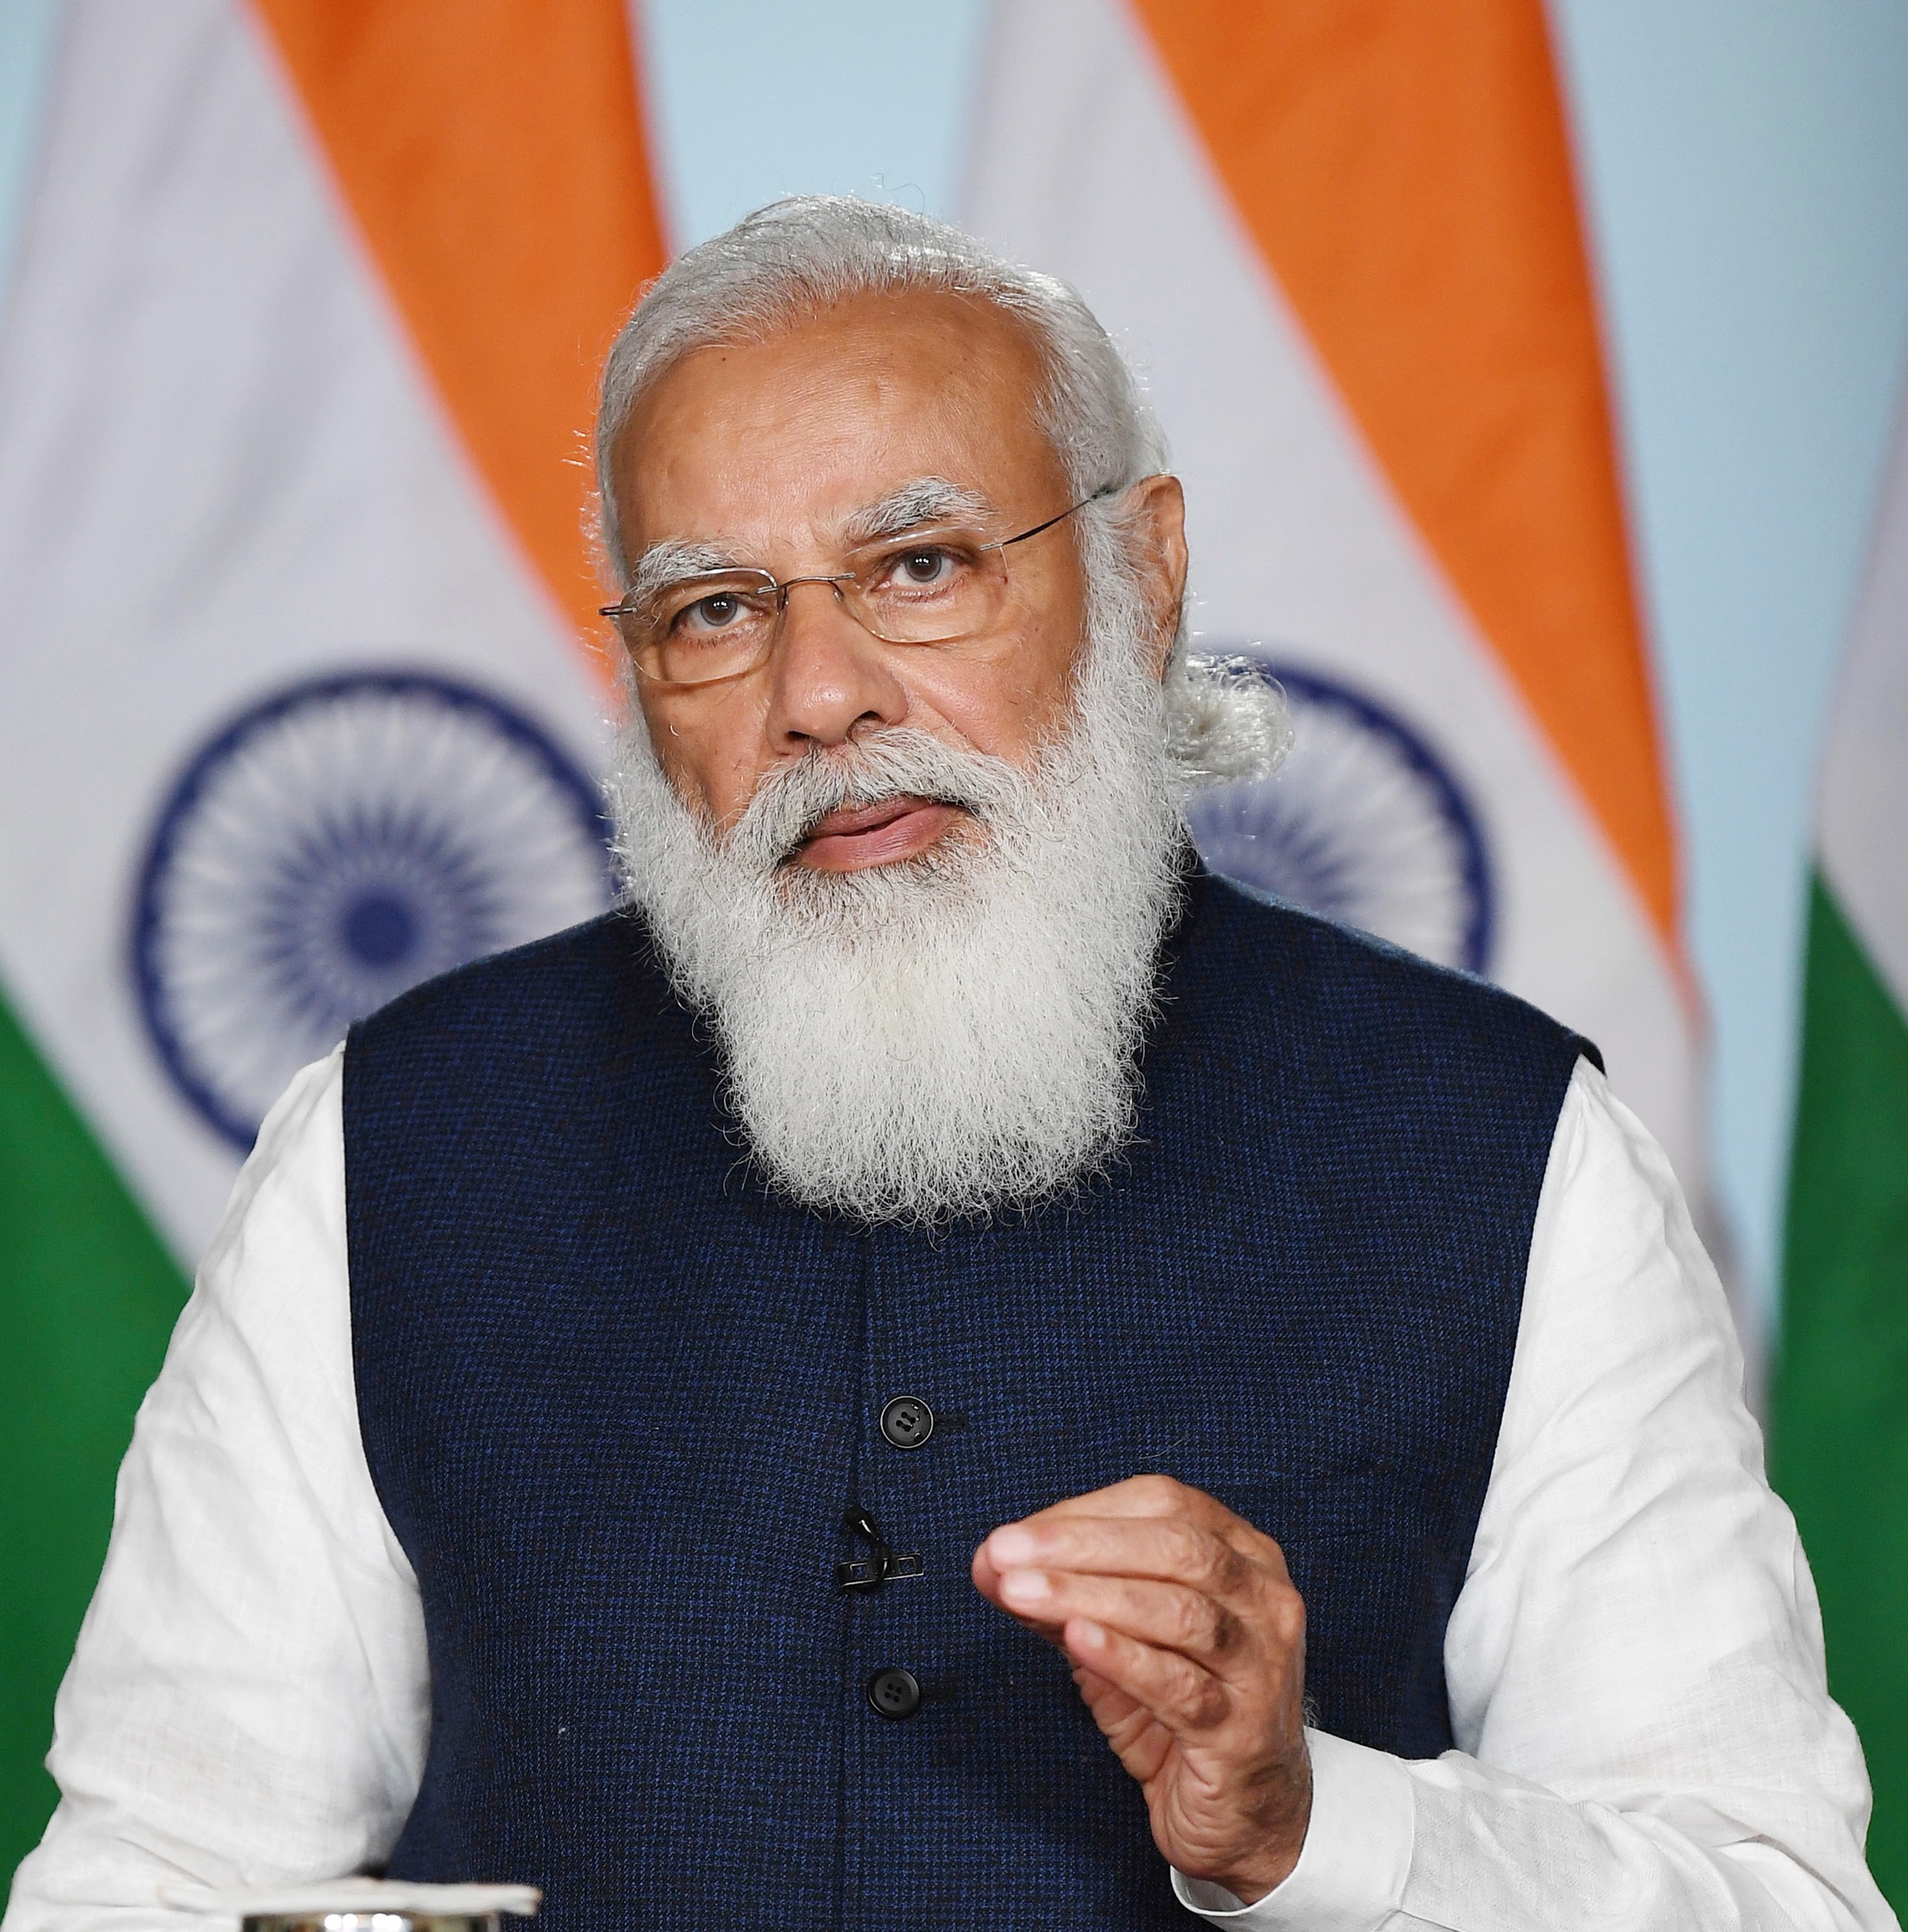 PM Modi to share his thoughts in ‘Mann Ki Baat’ program tomorrow